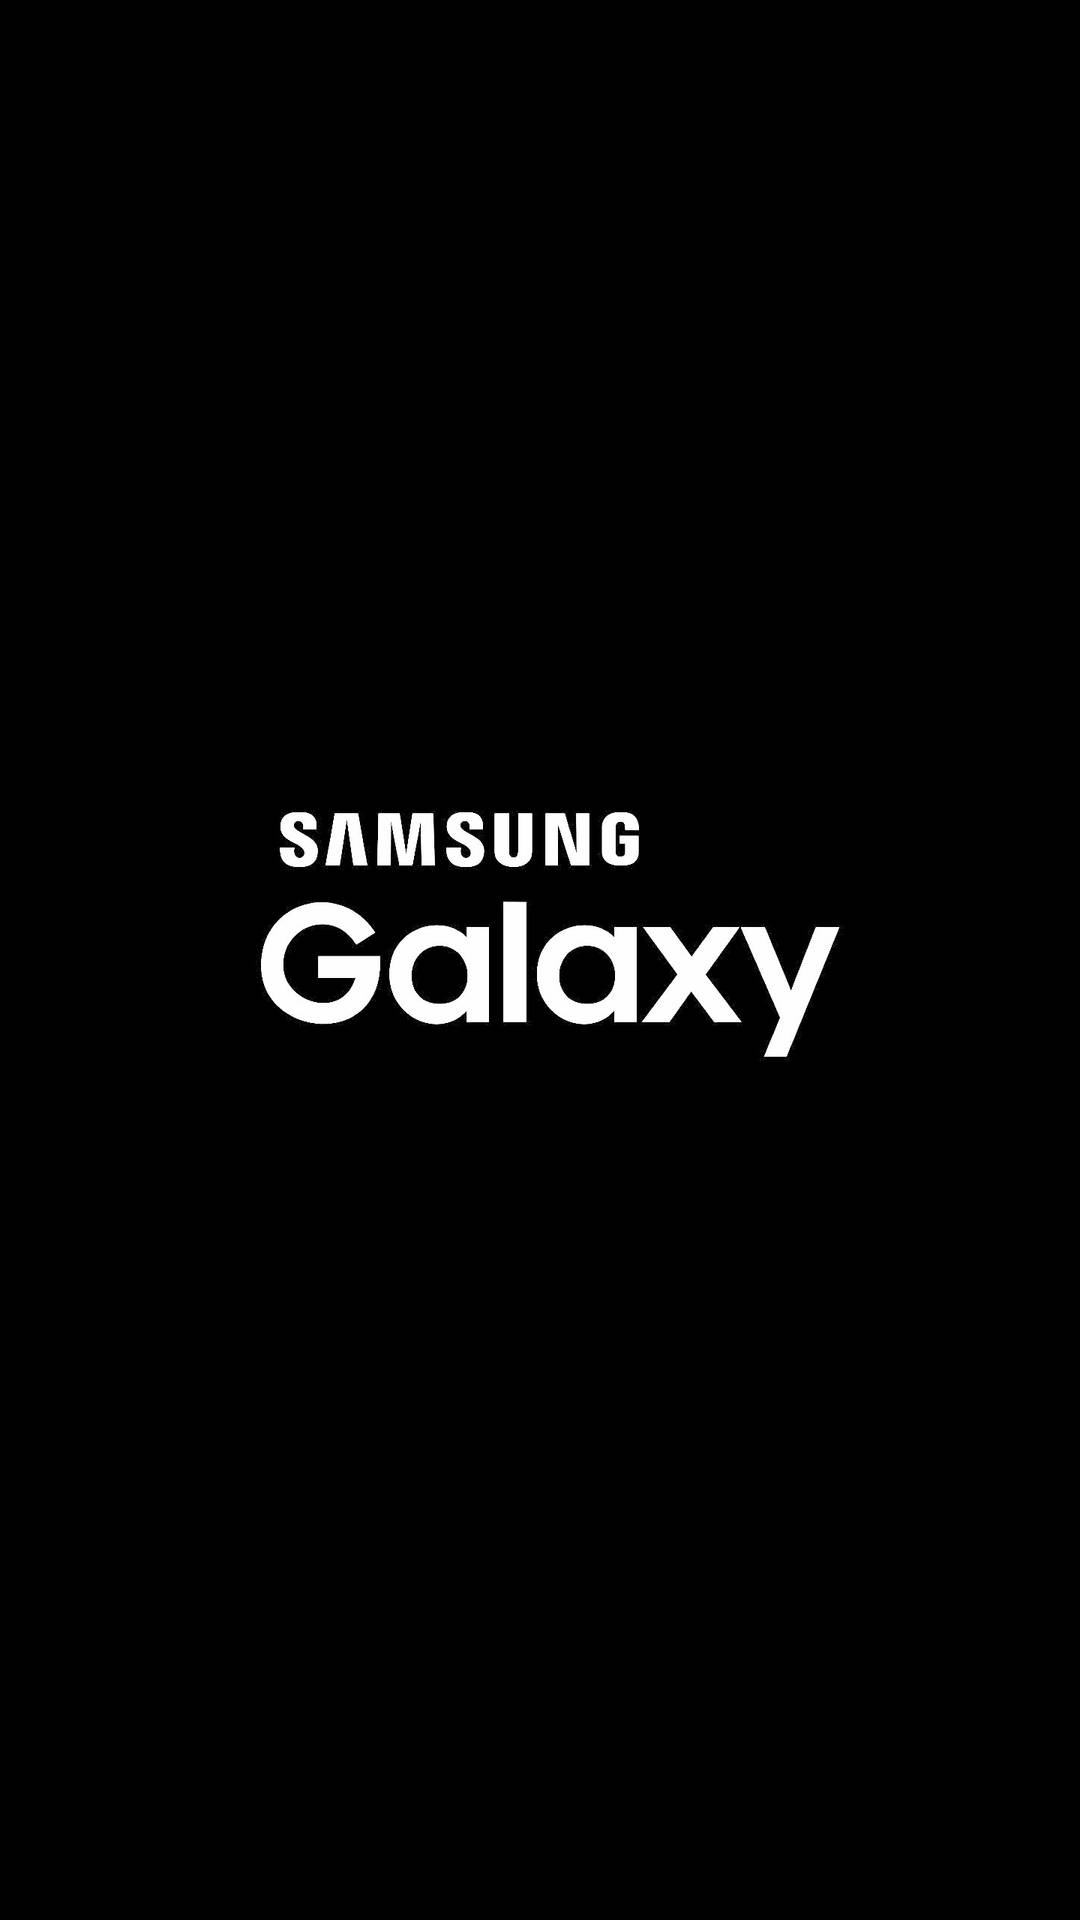 Samsung Galaxy Black And White Logo